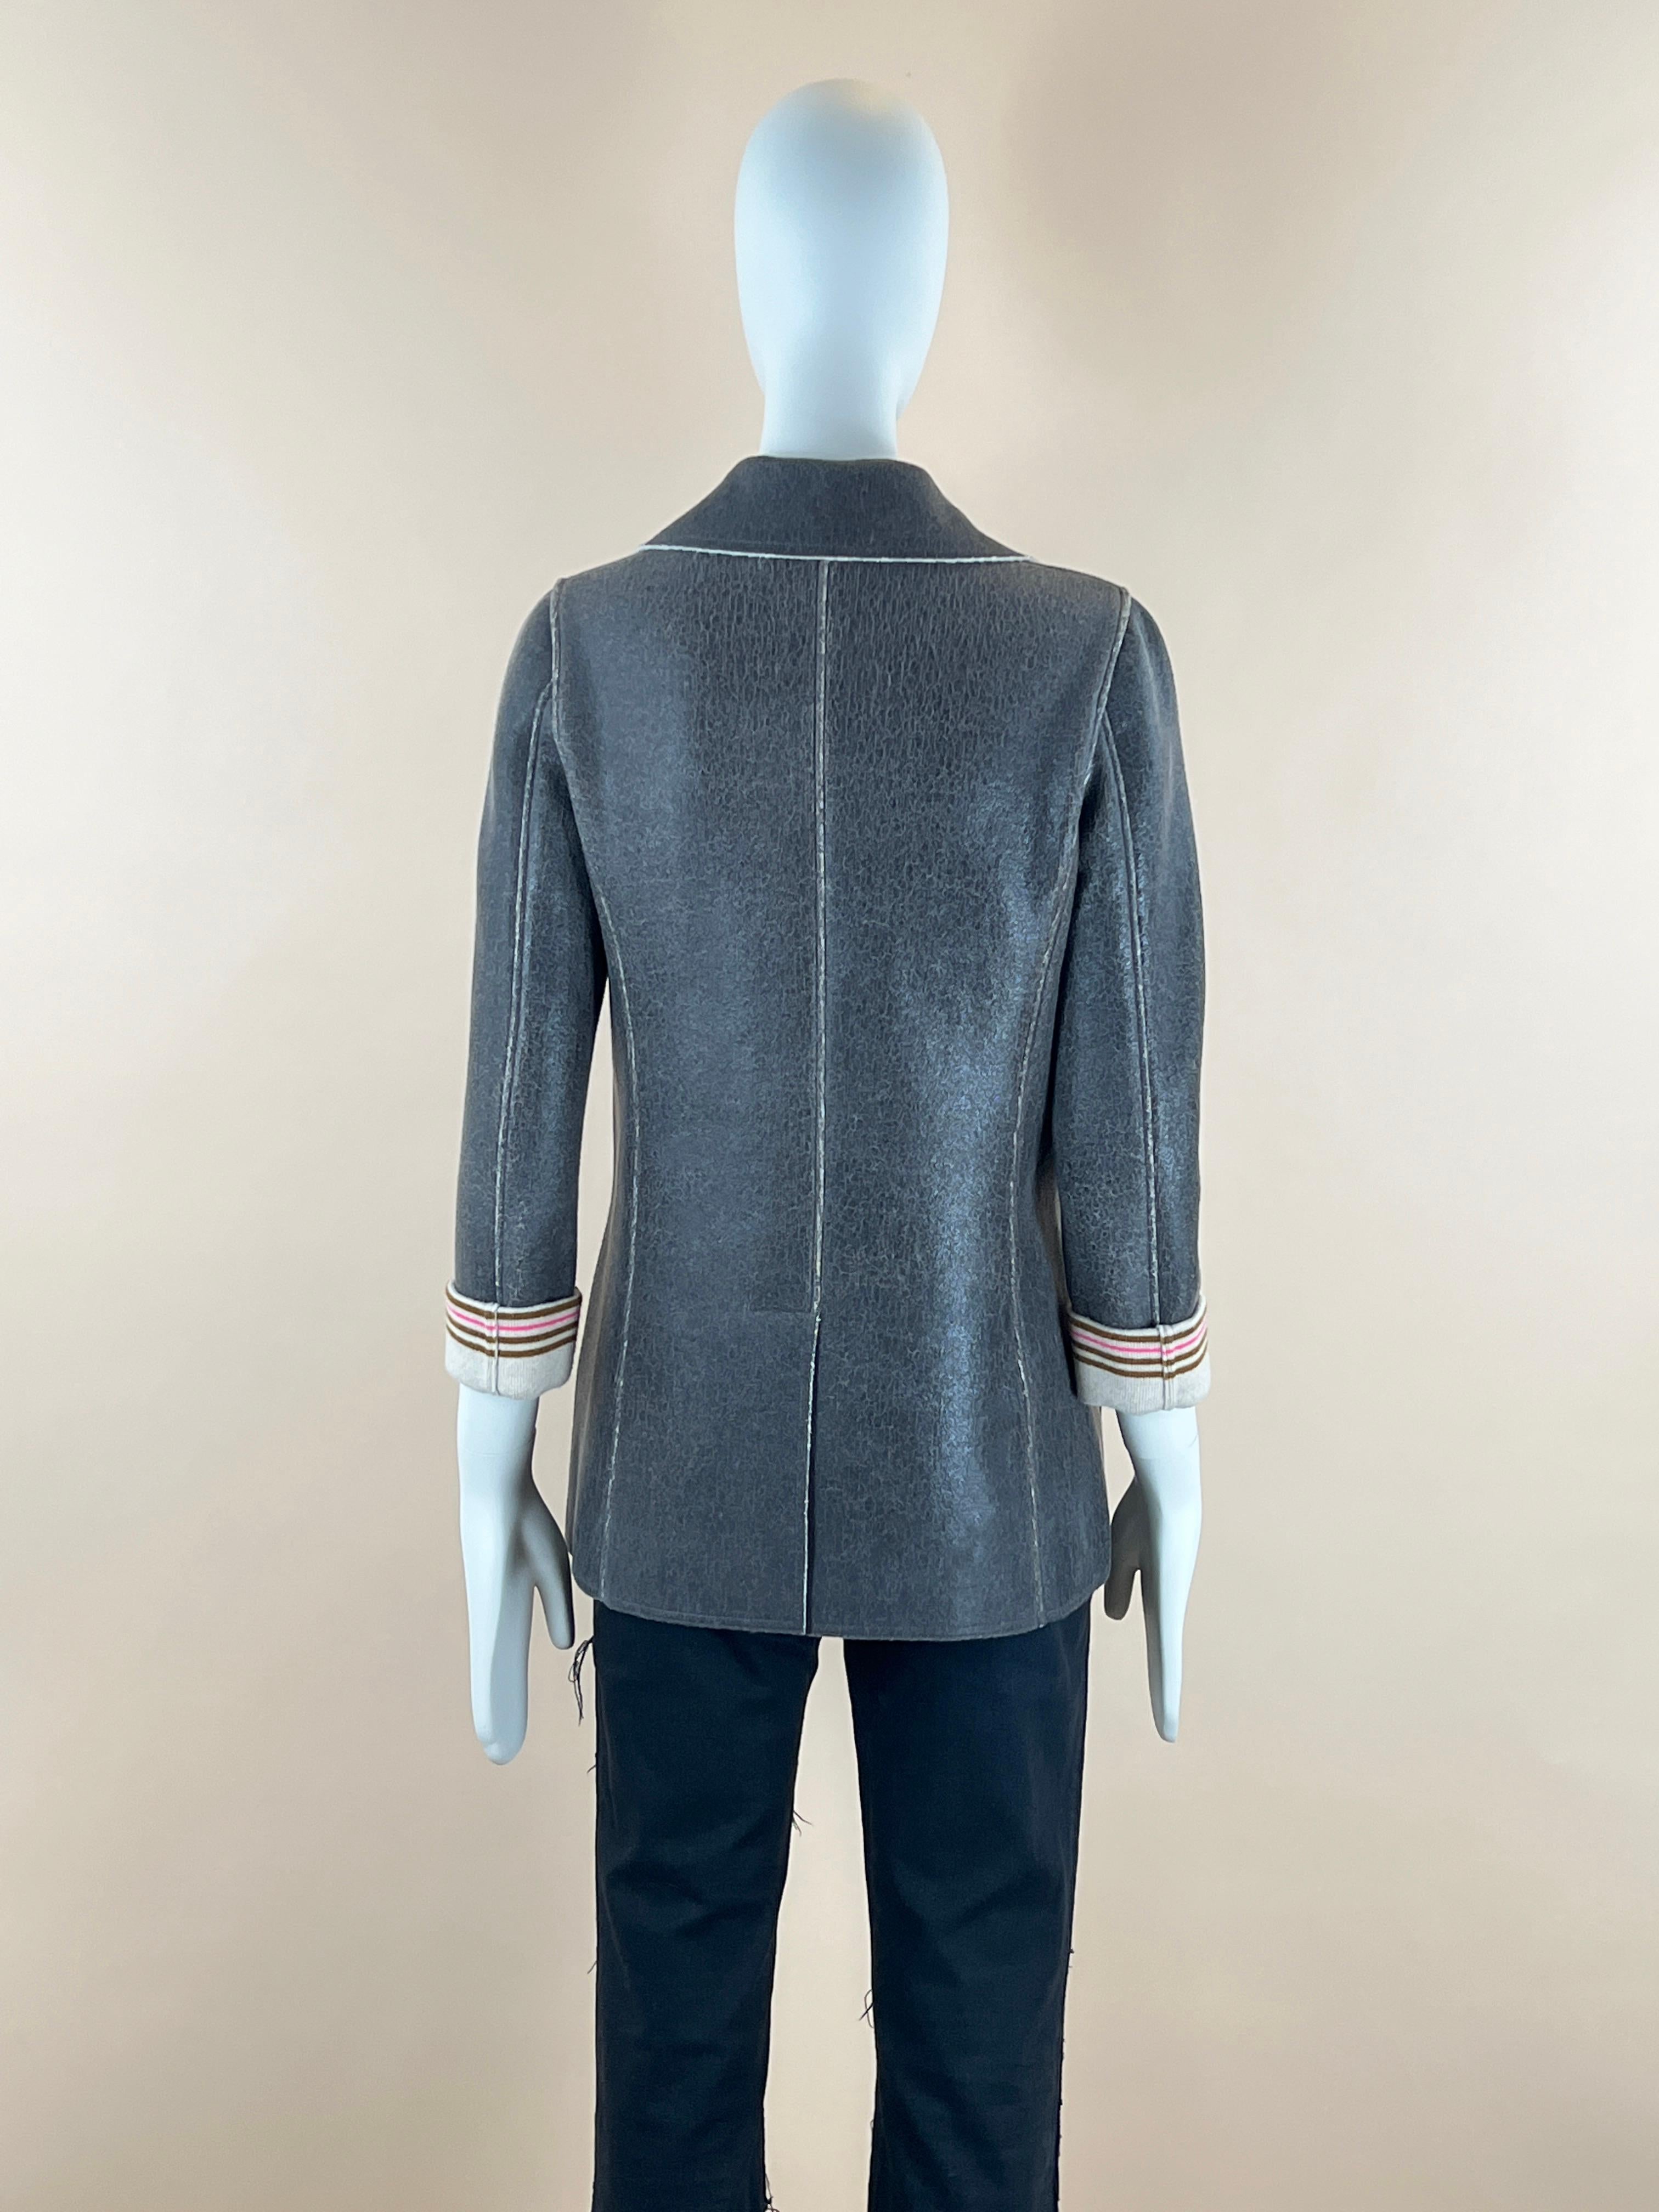 Chanel Paris / Dallas Runway Jacket Coat For Sale 9